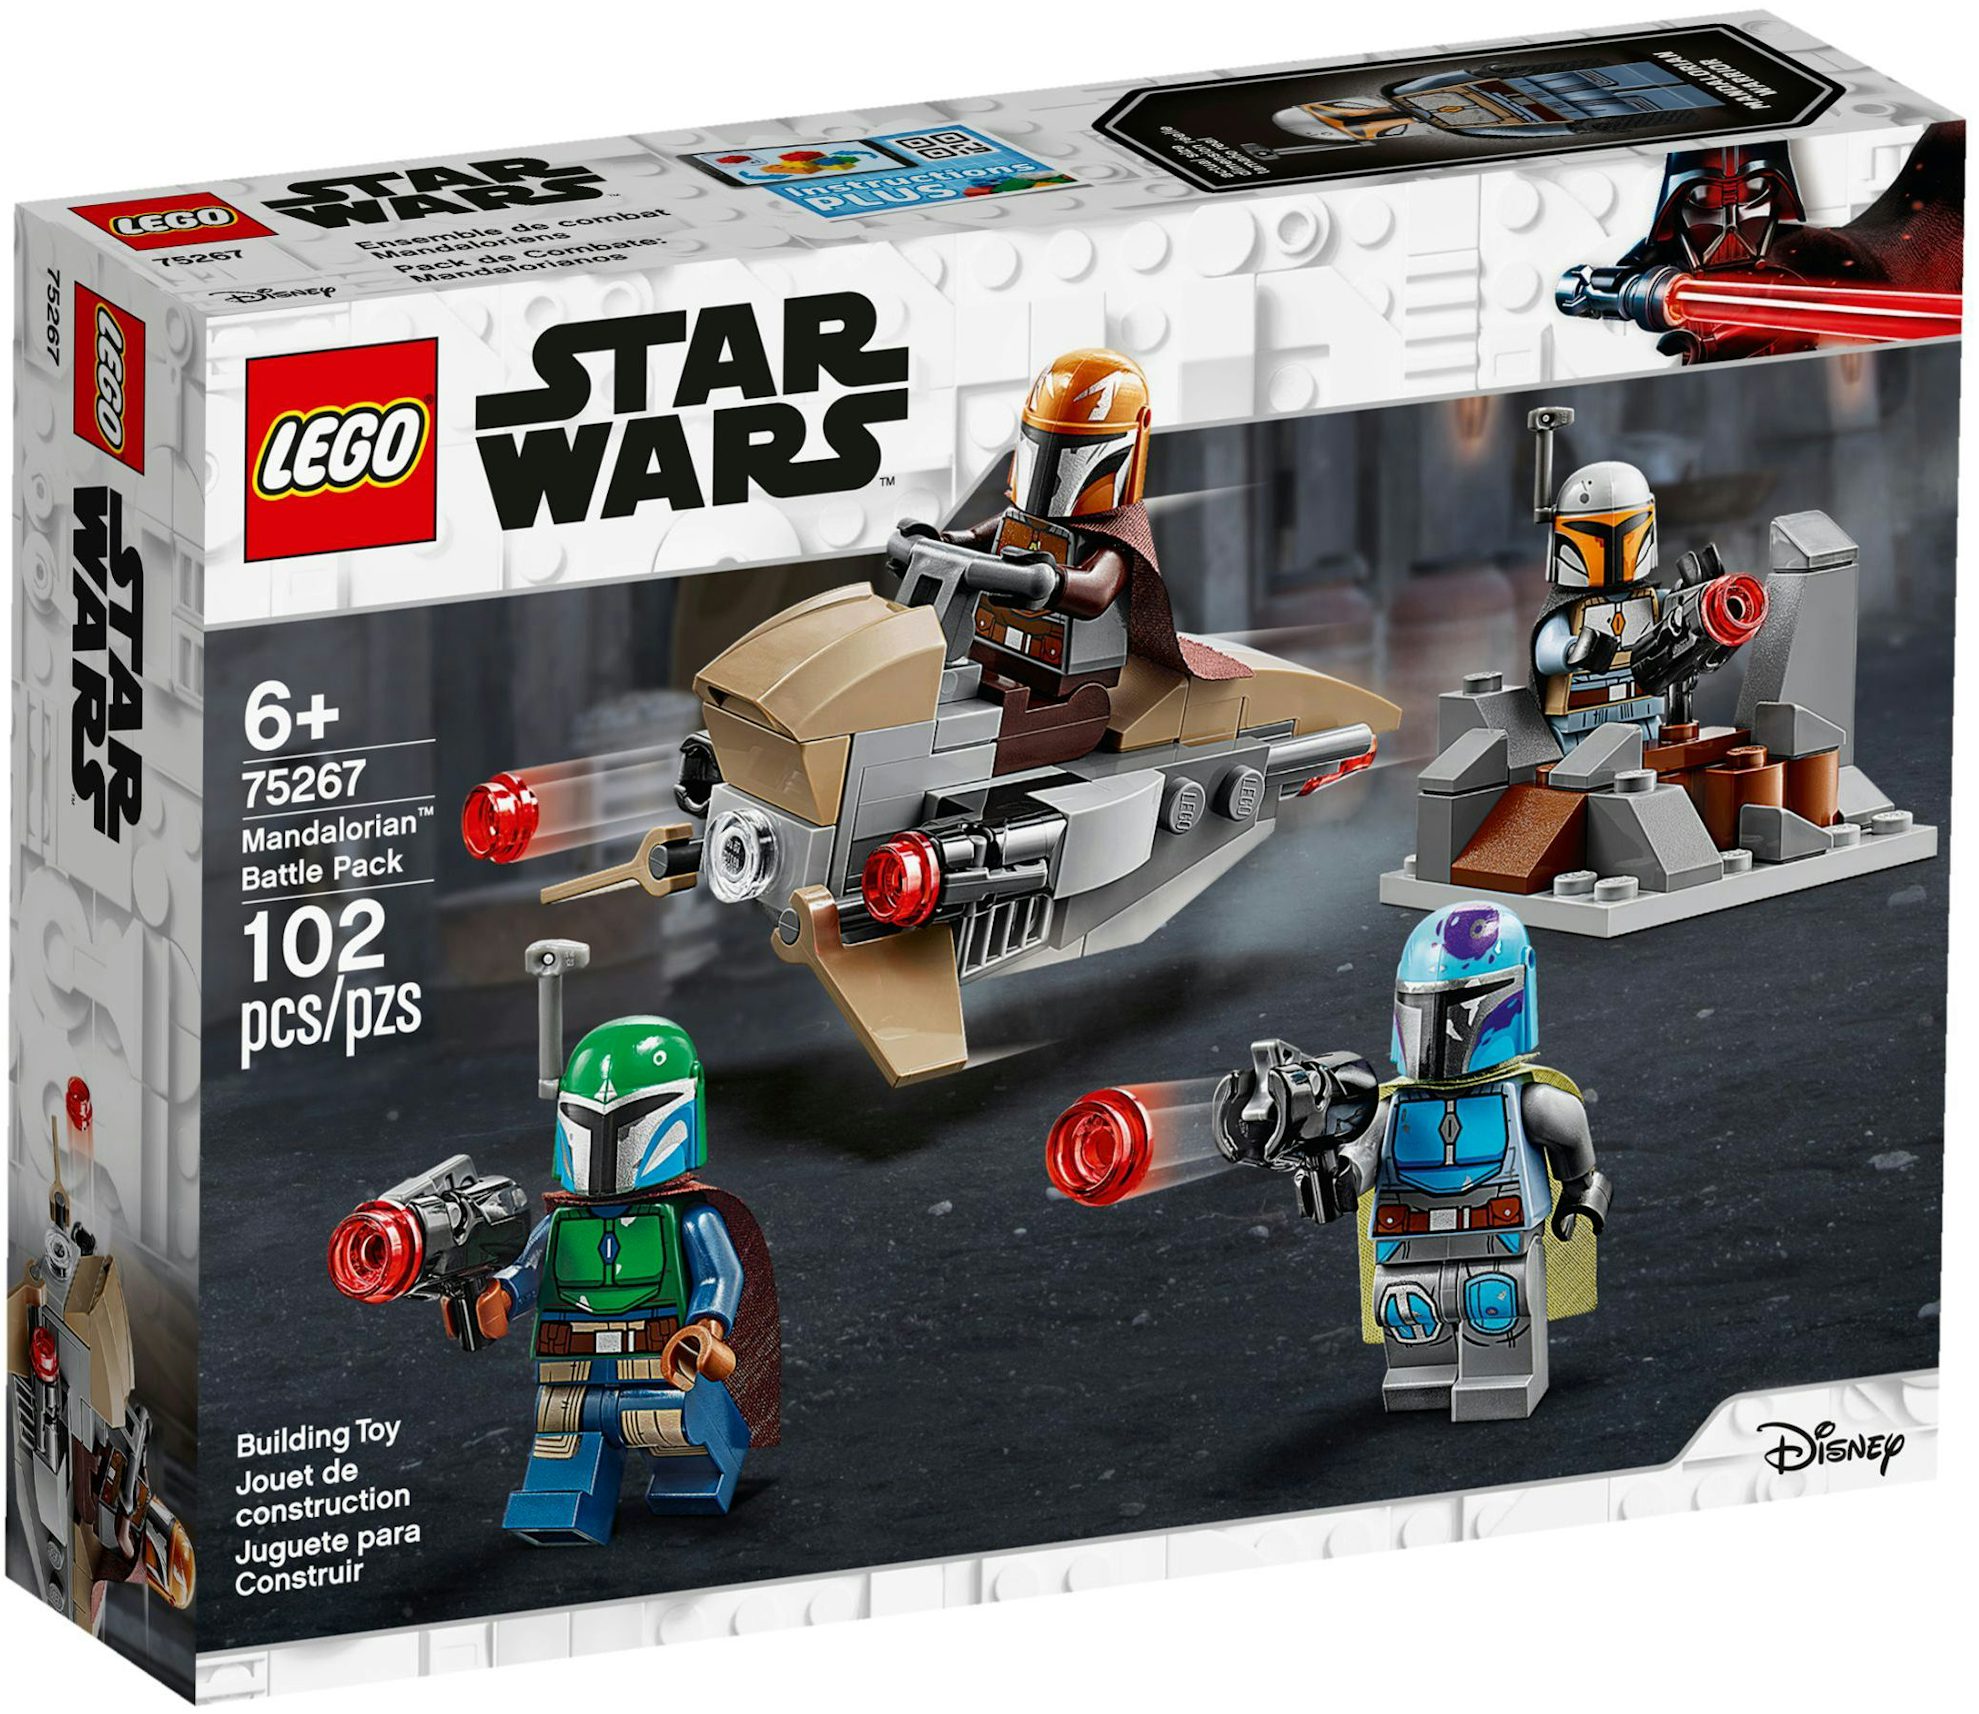 LEGO Star Wars Mandalorian Speeder Set 75022 - US